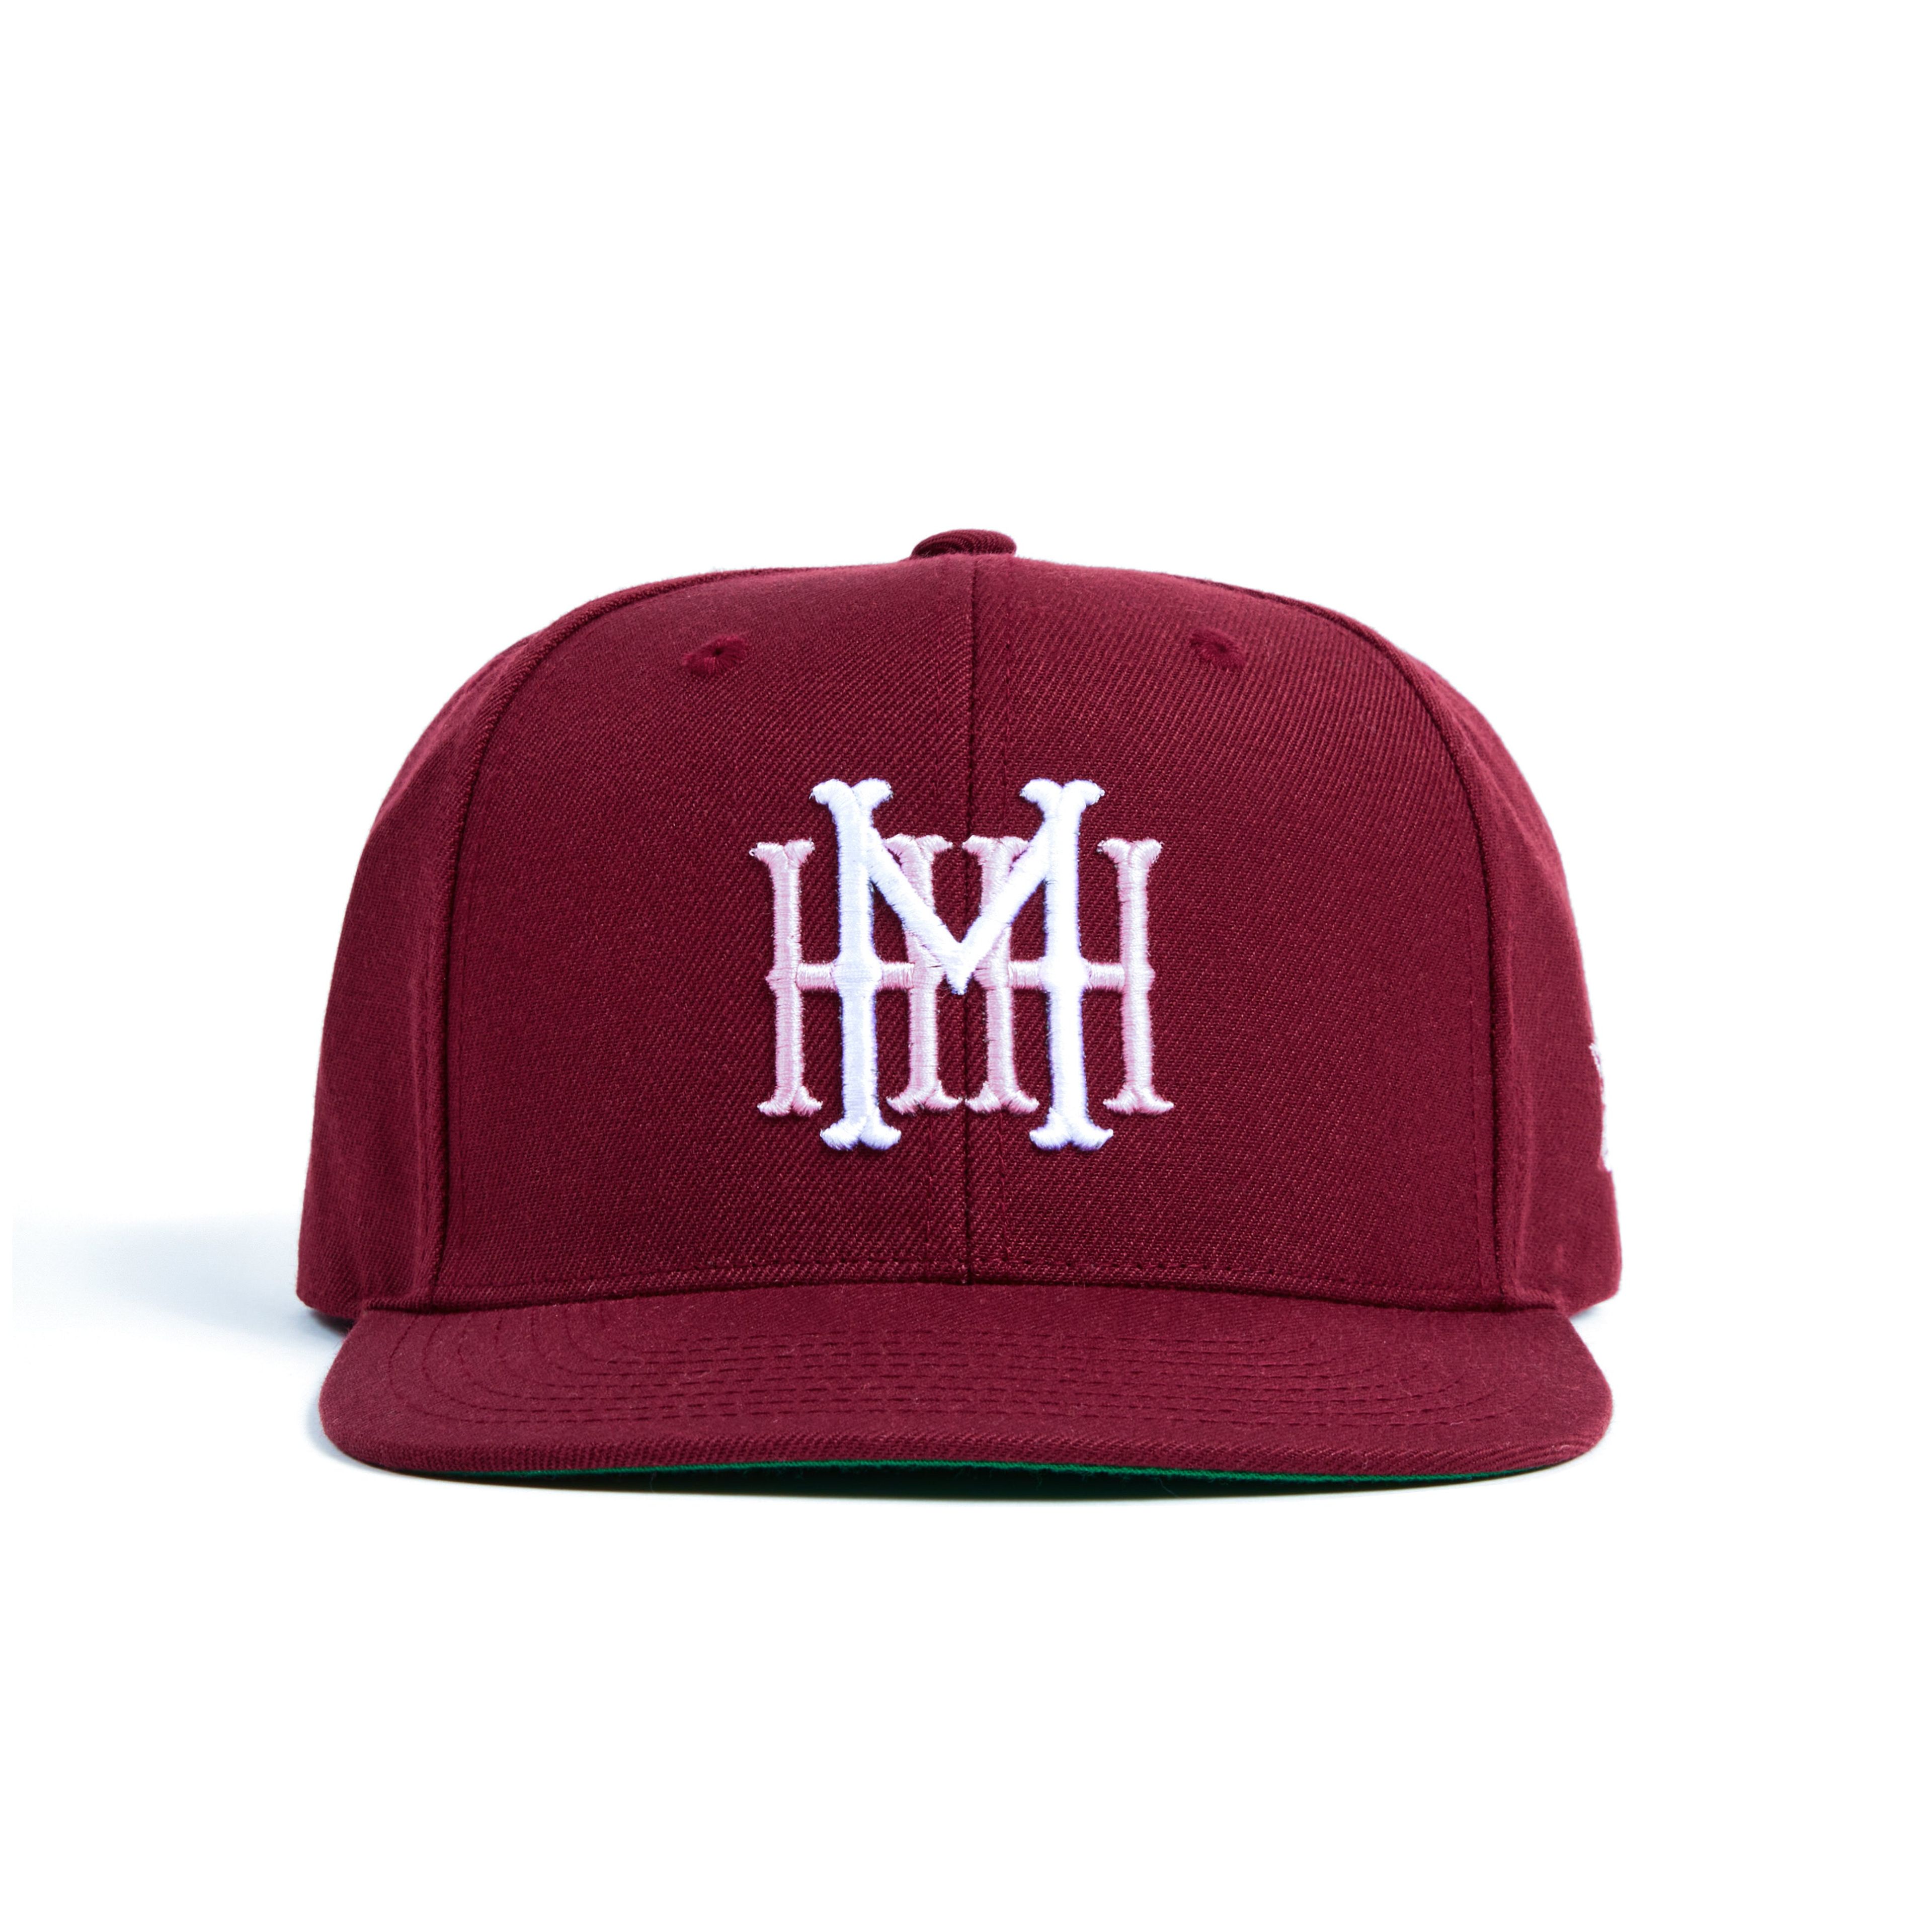 MHH Heritage Snapback Hat